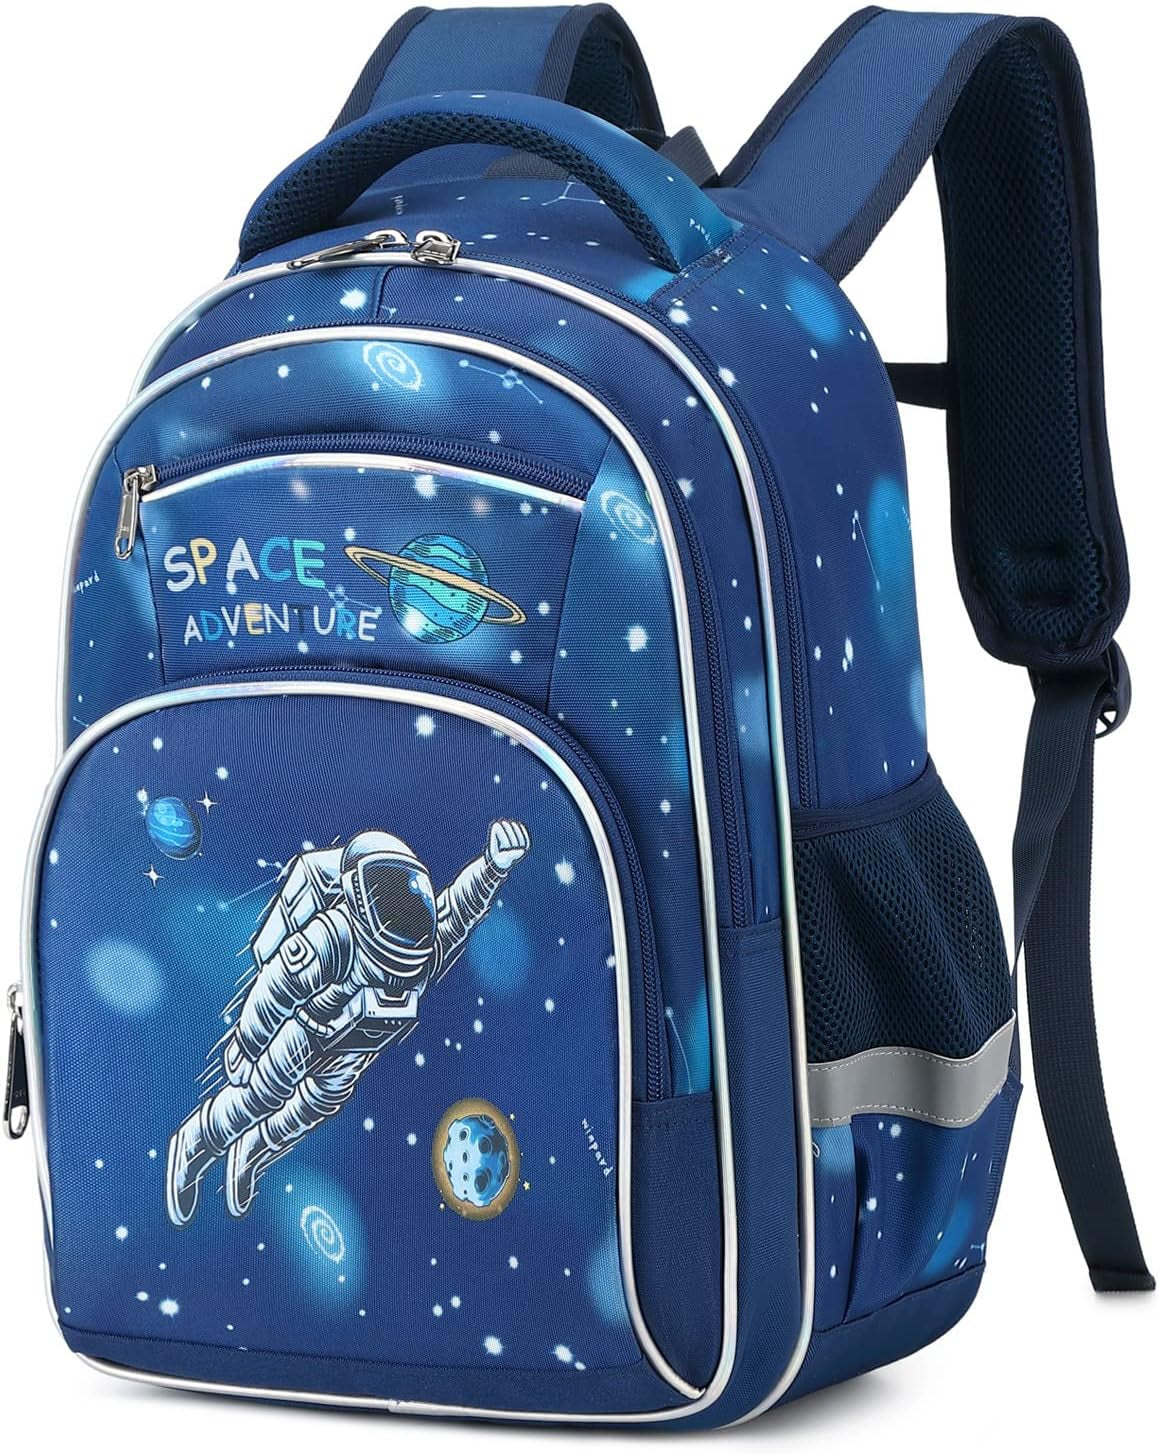 Backpack for Boys Girls School Bookbags,Kindergarten Elementary Middle School Lightweight Waterproof Multifunctional Large Capacity for Backpack (16 Inch Astronaut Fun Prints)